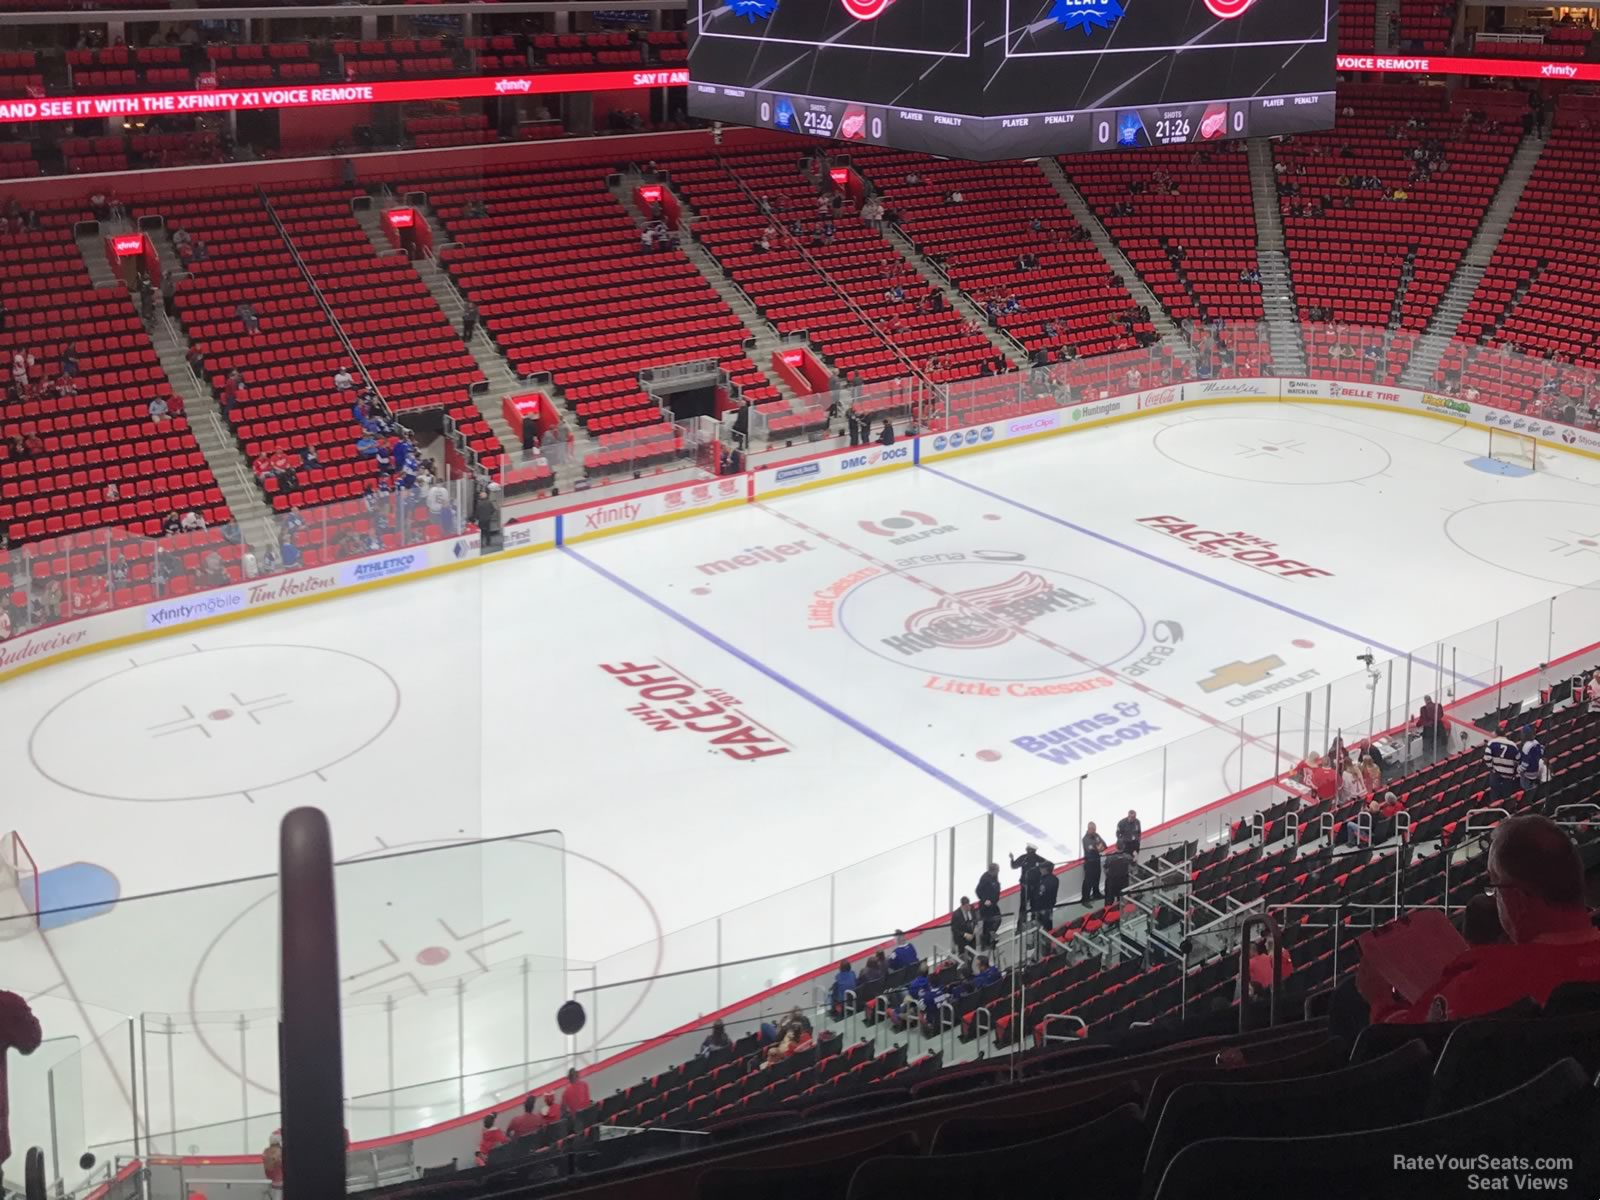 mezzanine 14, row 4 seat view  for hockey - little caesars arena